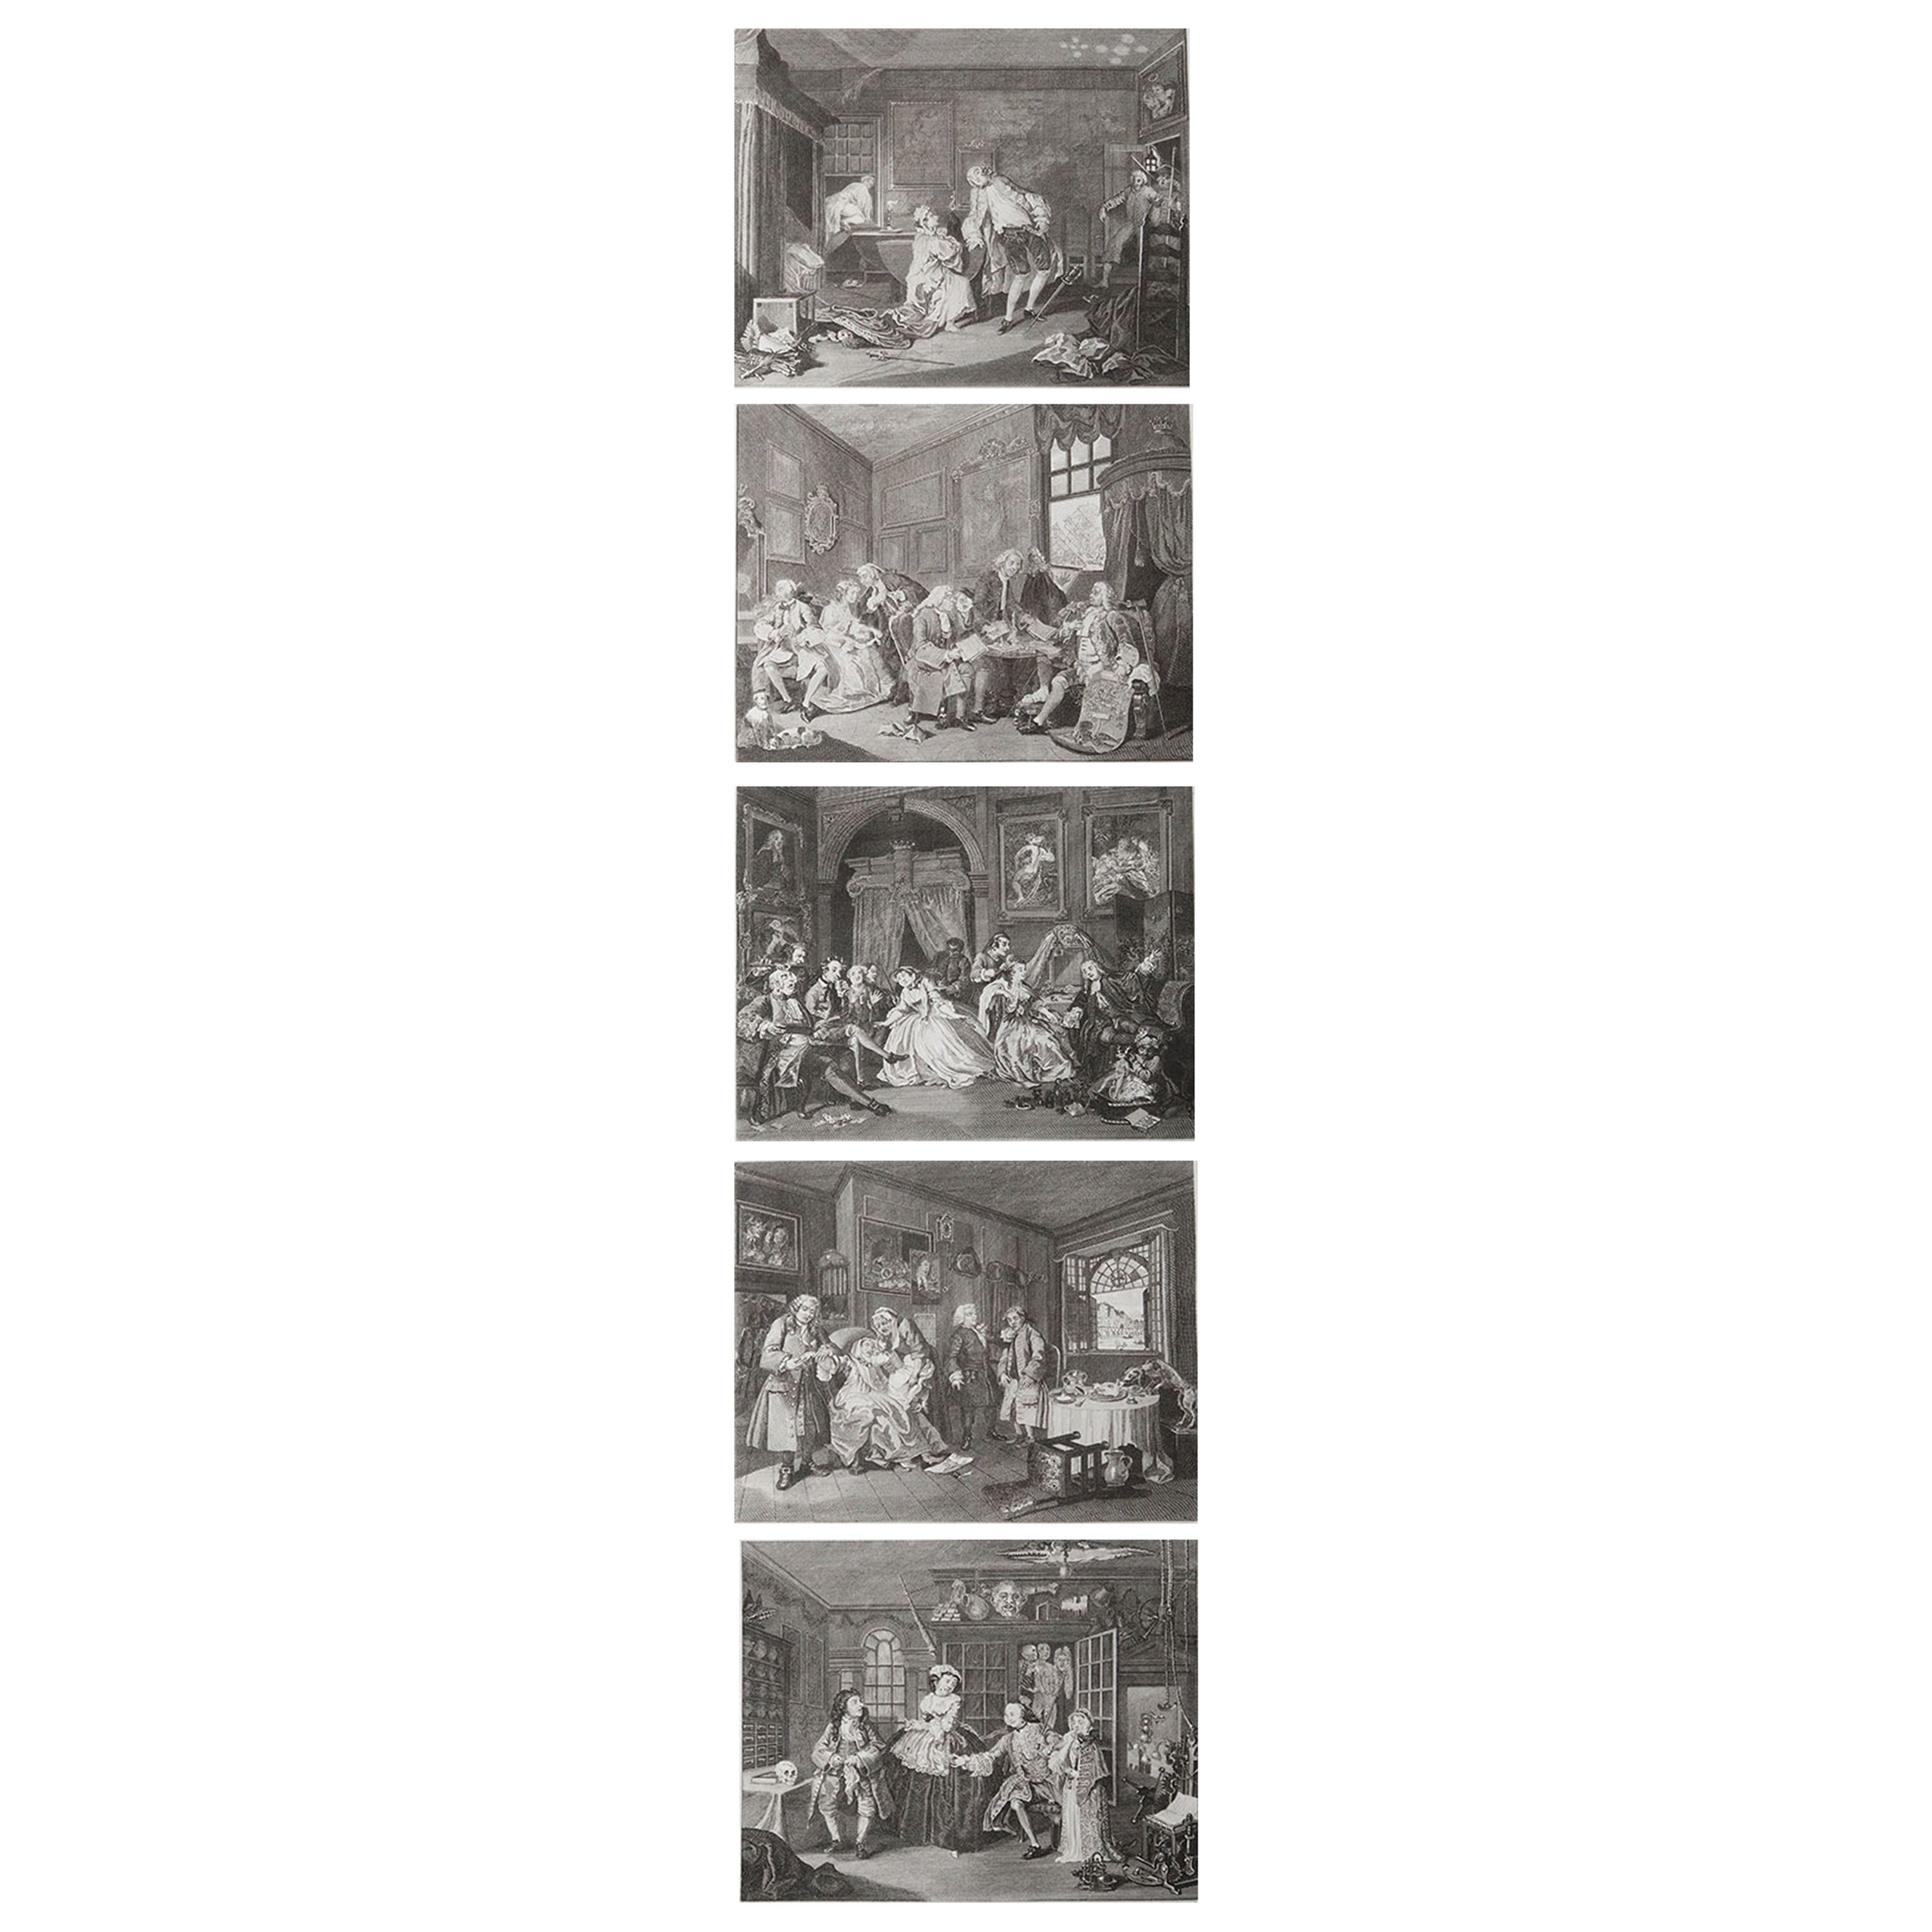 Set of 5 Original Antique Prints After William Hogarth, "Marriage A La Mode" 